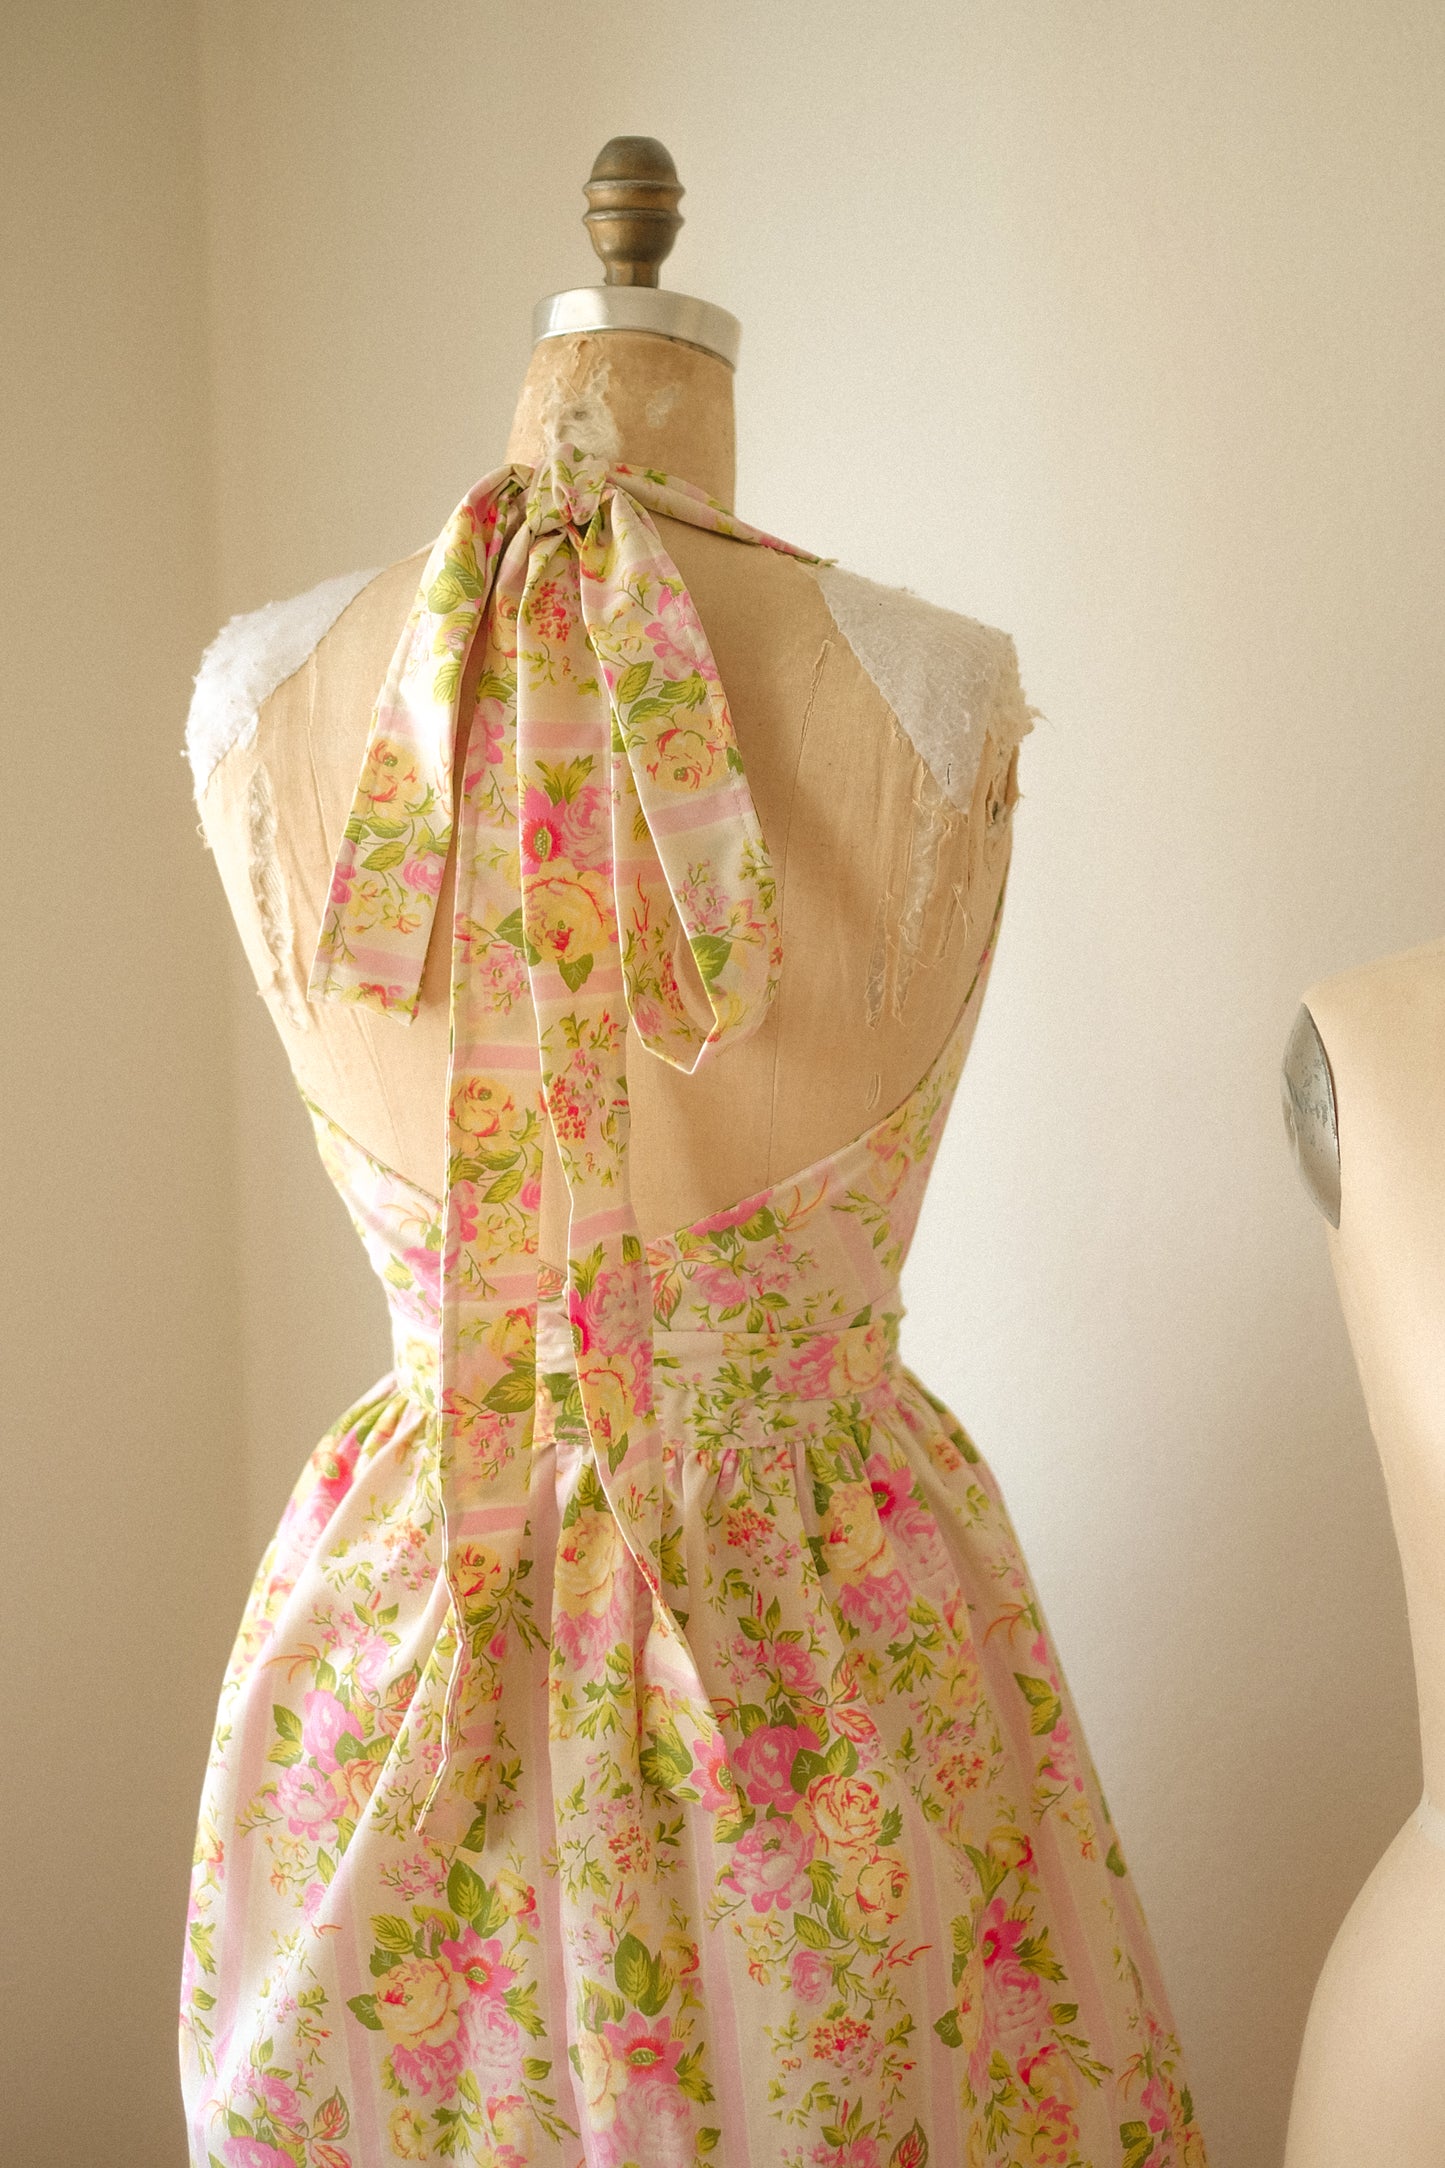 Handmade vintage apron - Darling ♡